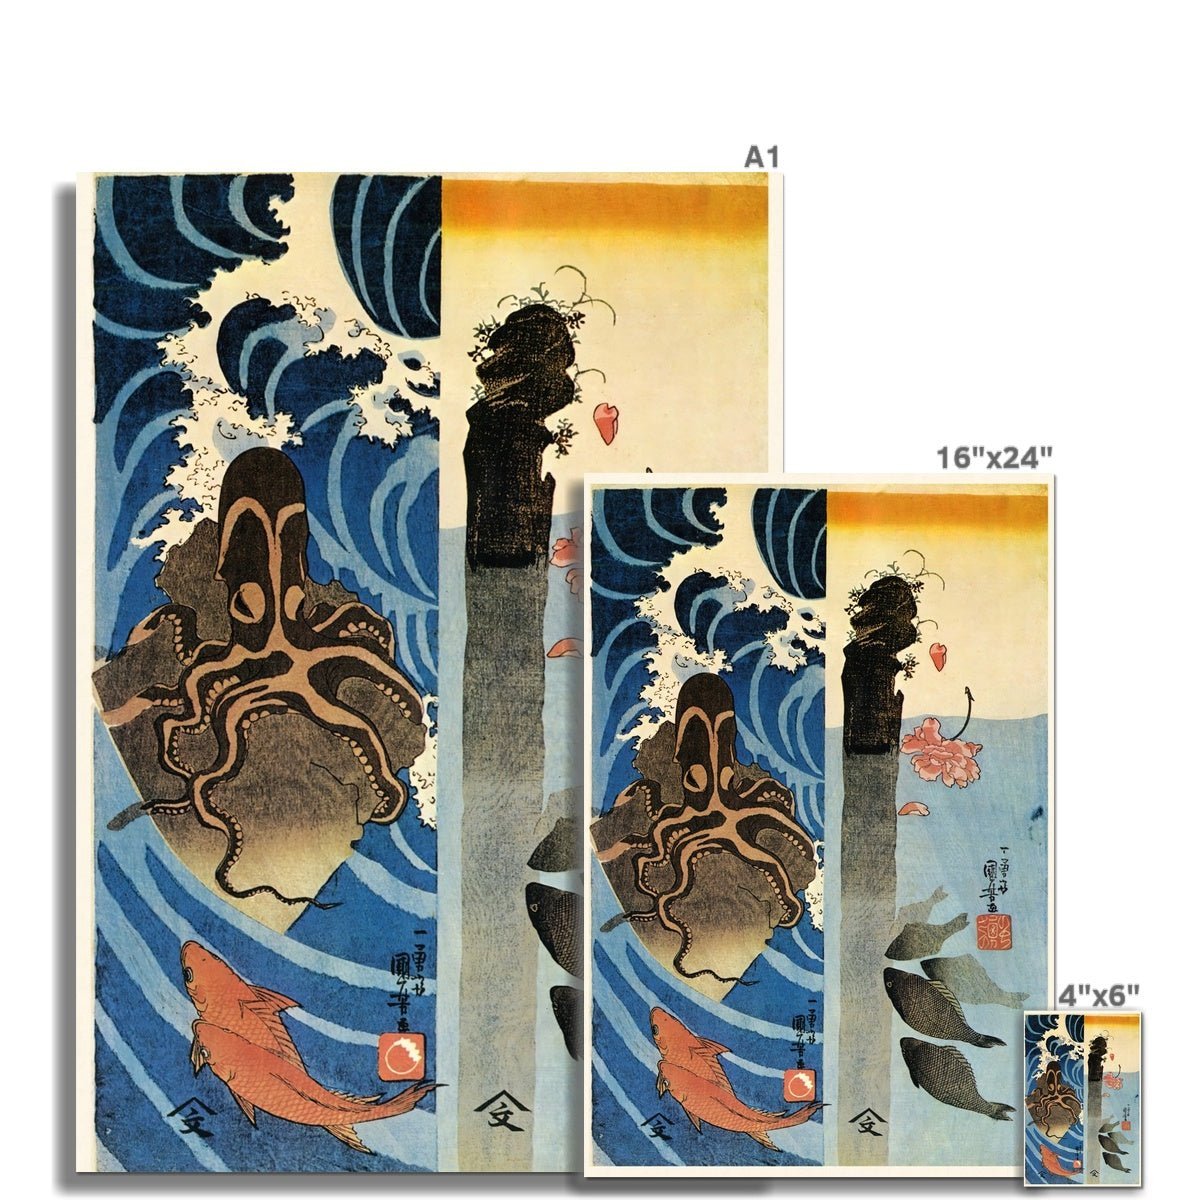 giclee Kuniyoshi Utagawa, Octopus, Red Fish Ukiyo-e Antique Vintage Woodblock Print Marine Life Ocean Creatures Japan Fine Art Print